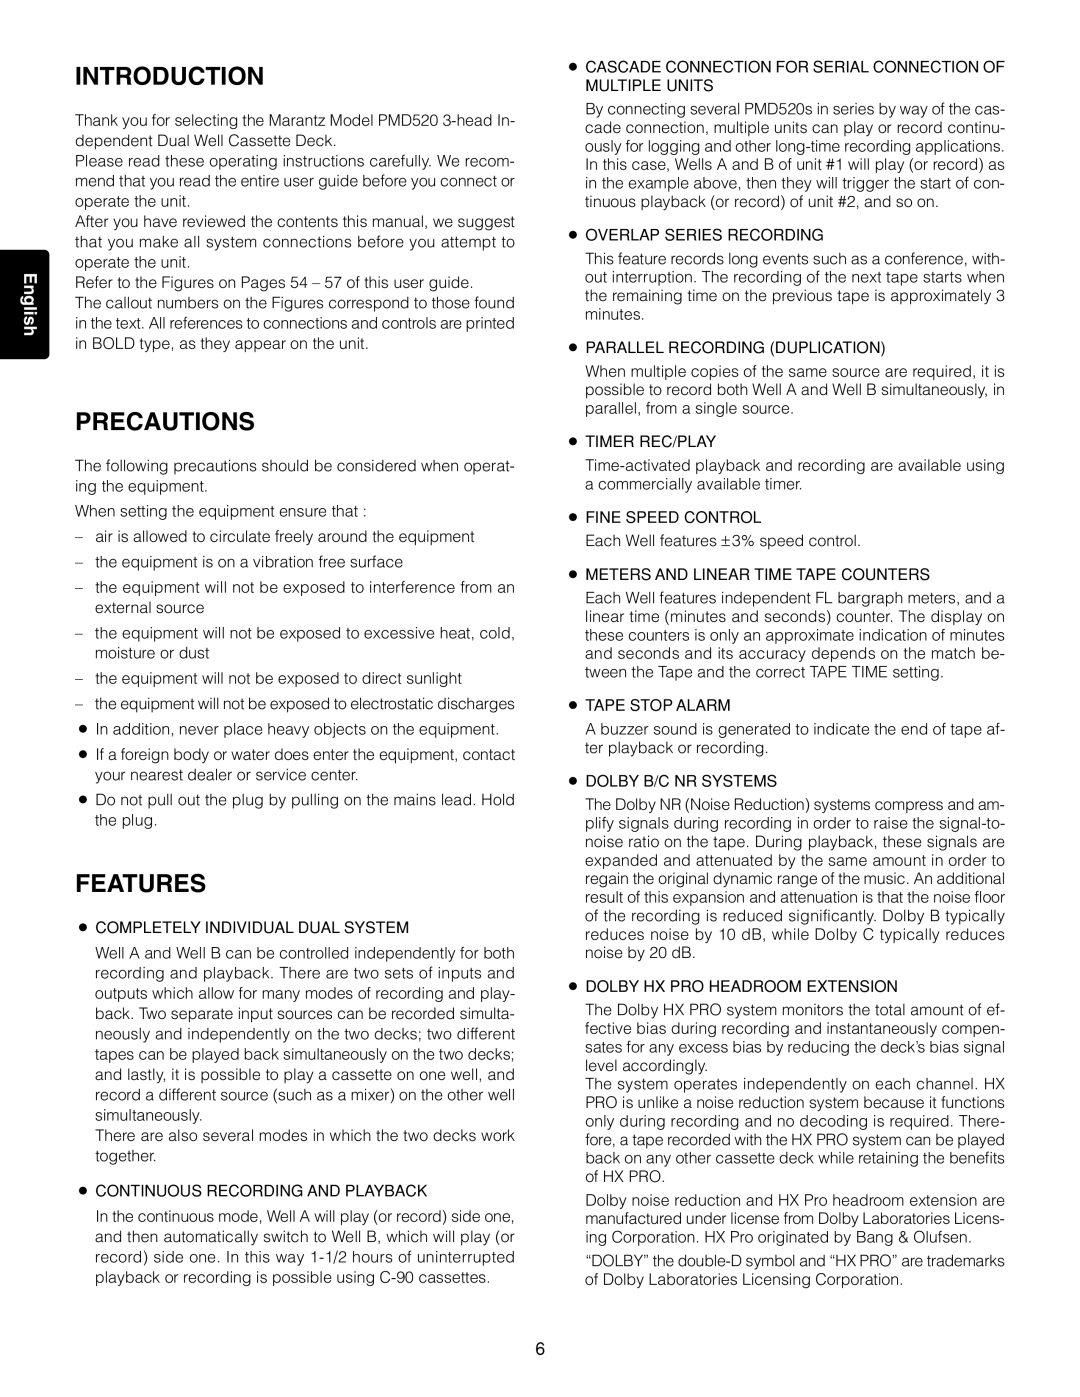 Marantz PMD520 manual Introduction, Precautions, Features 